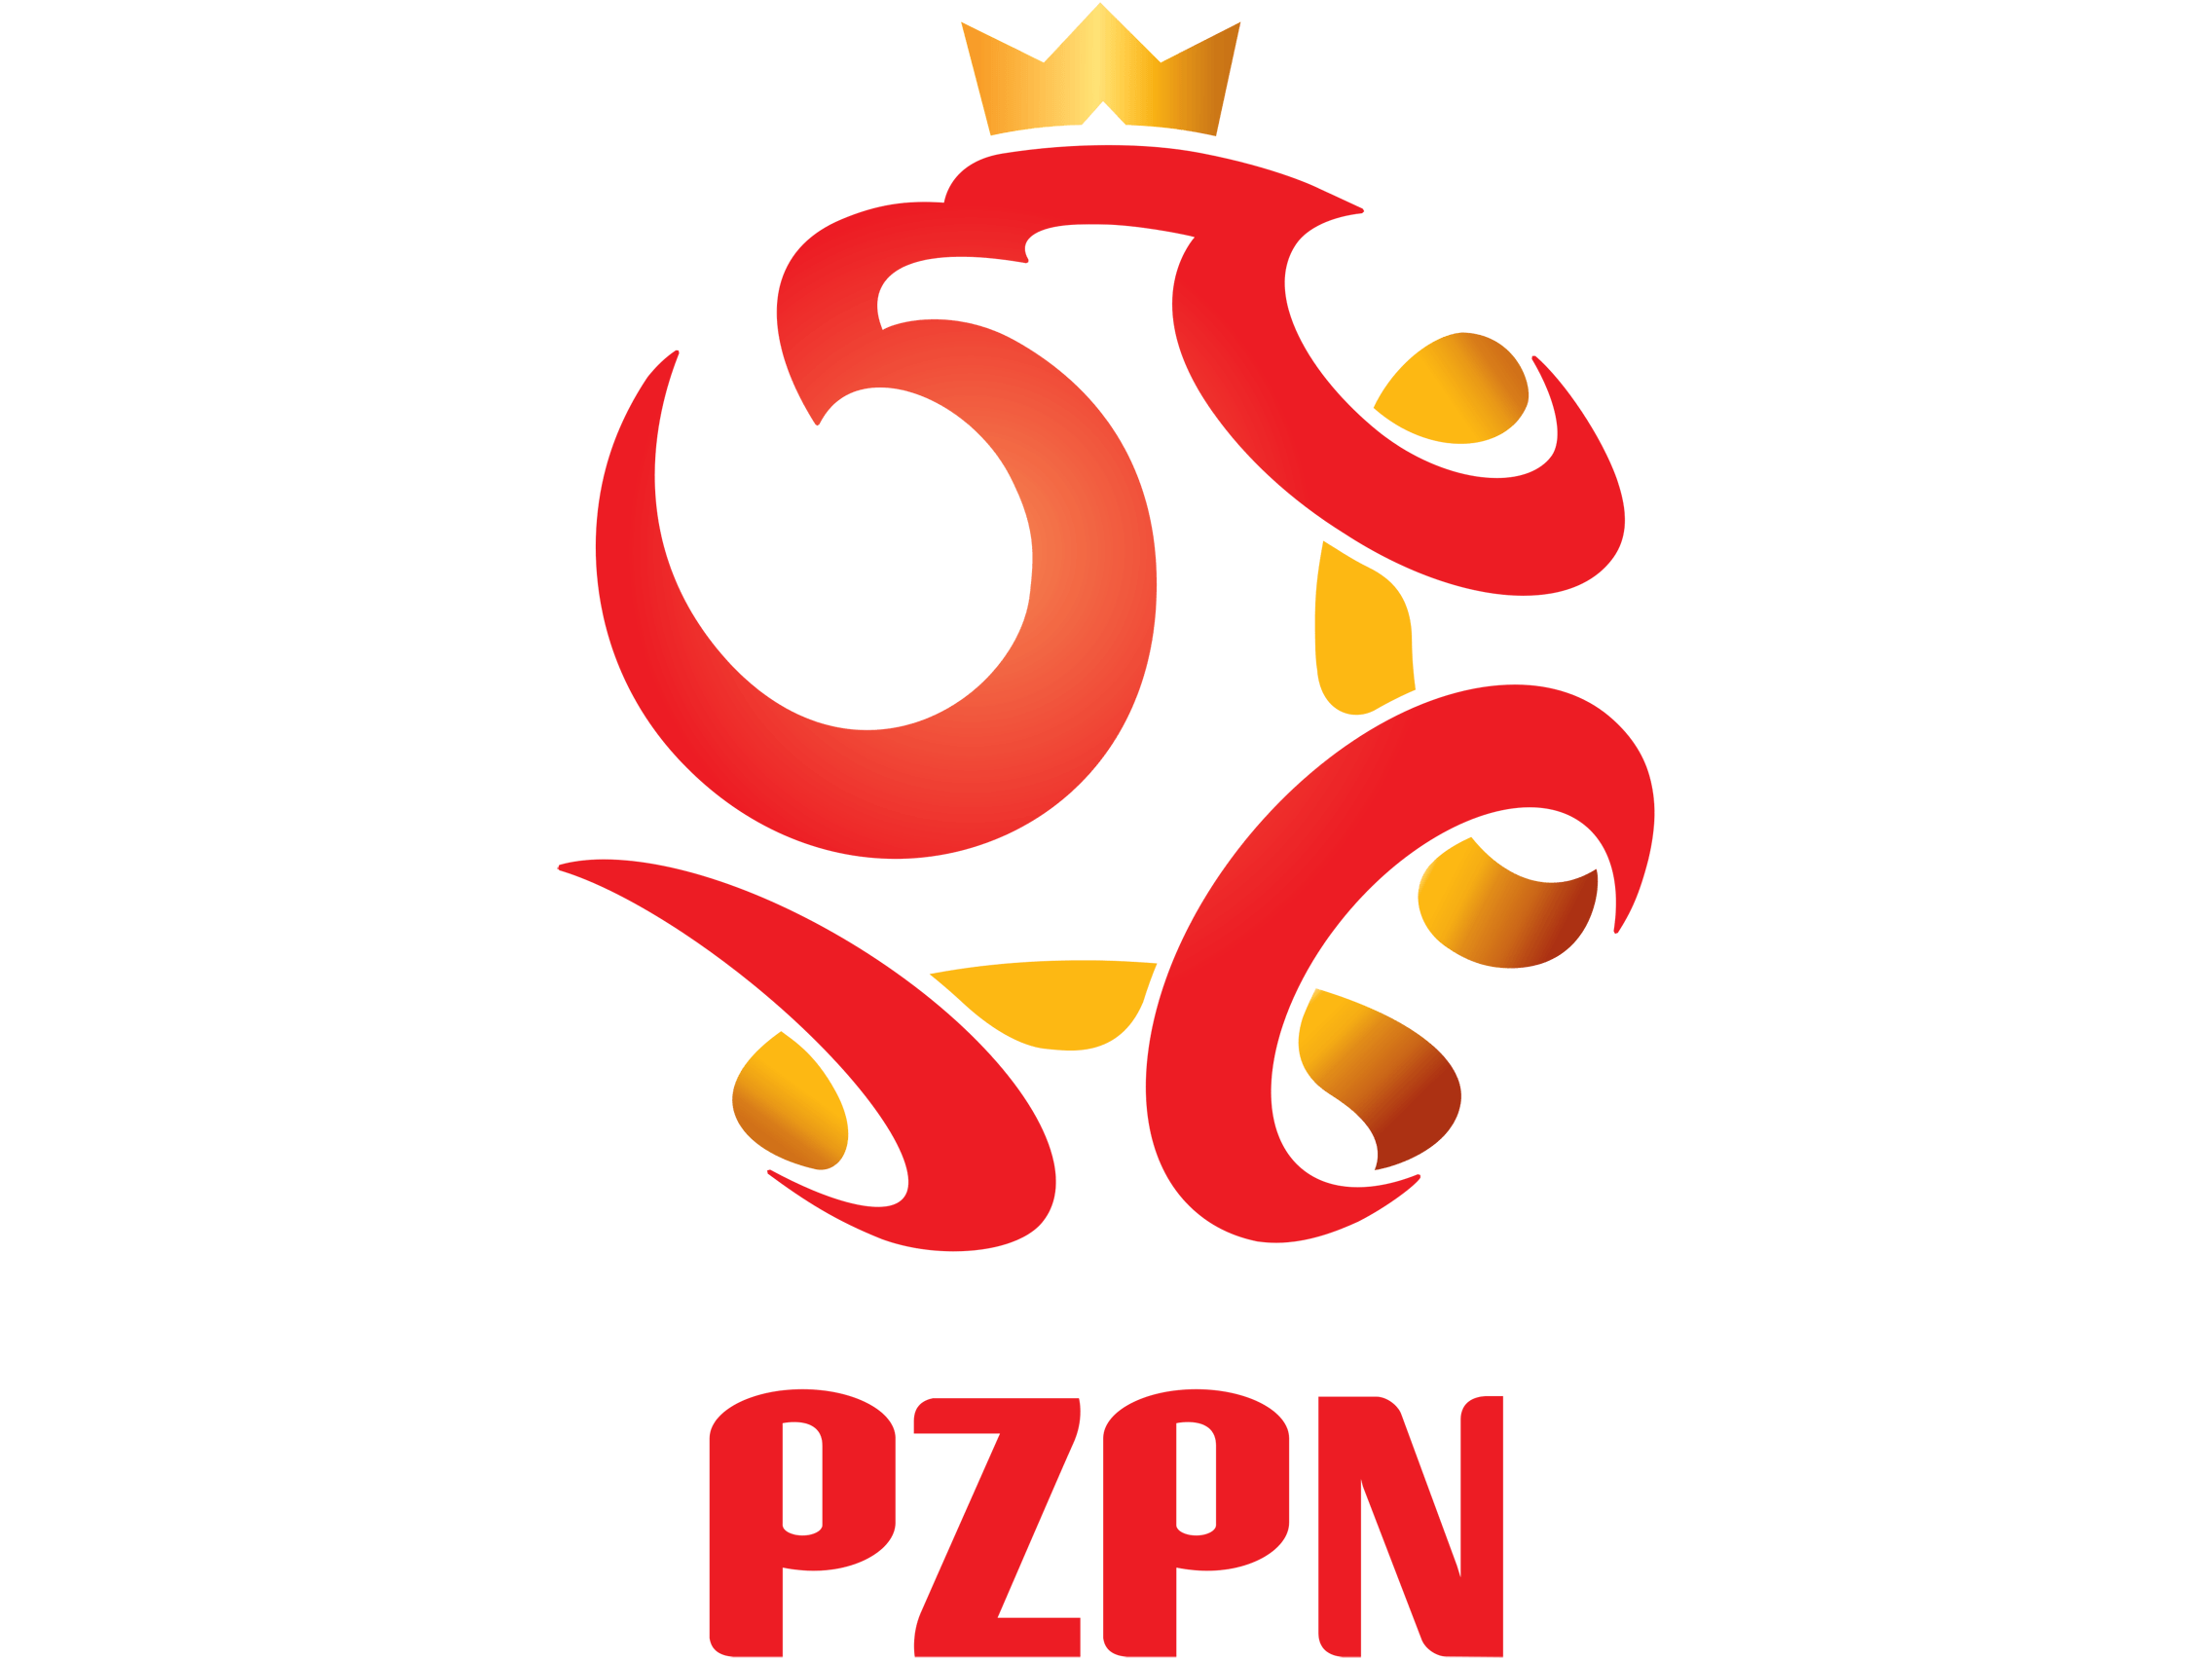 Poland Logo - PZPN logo